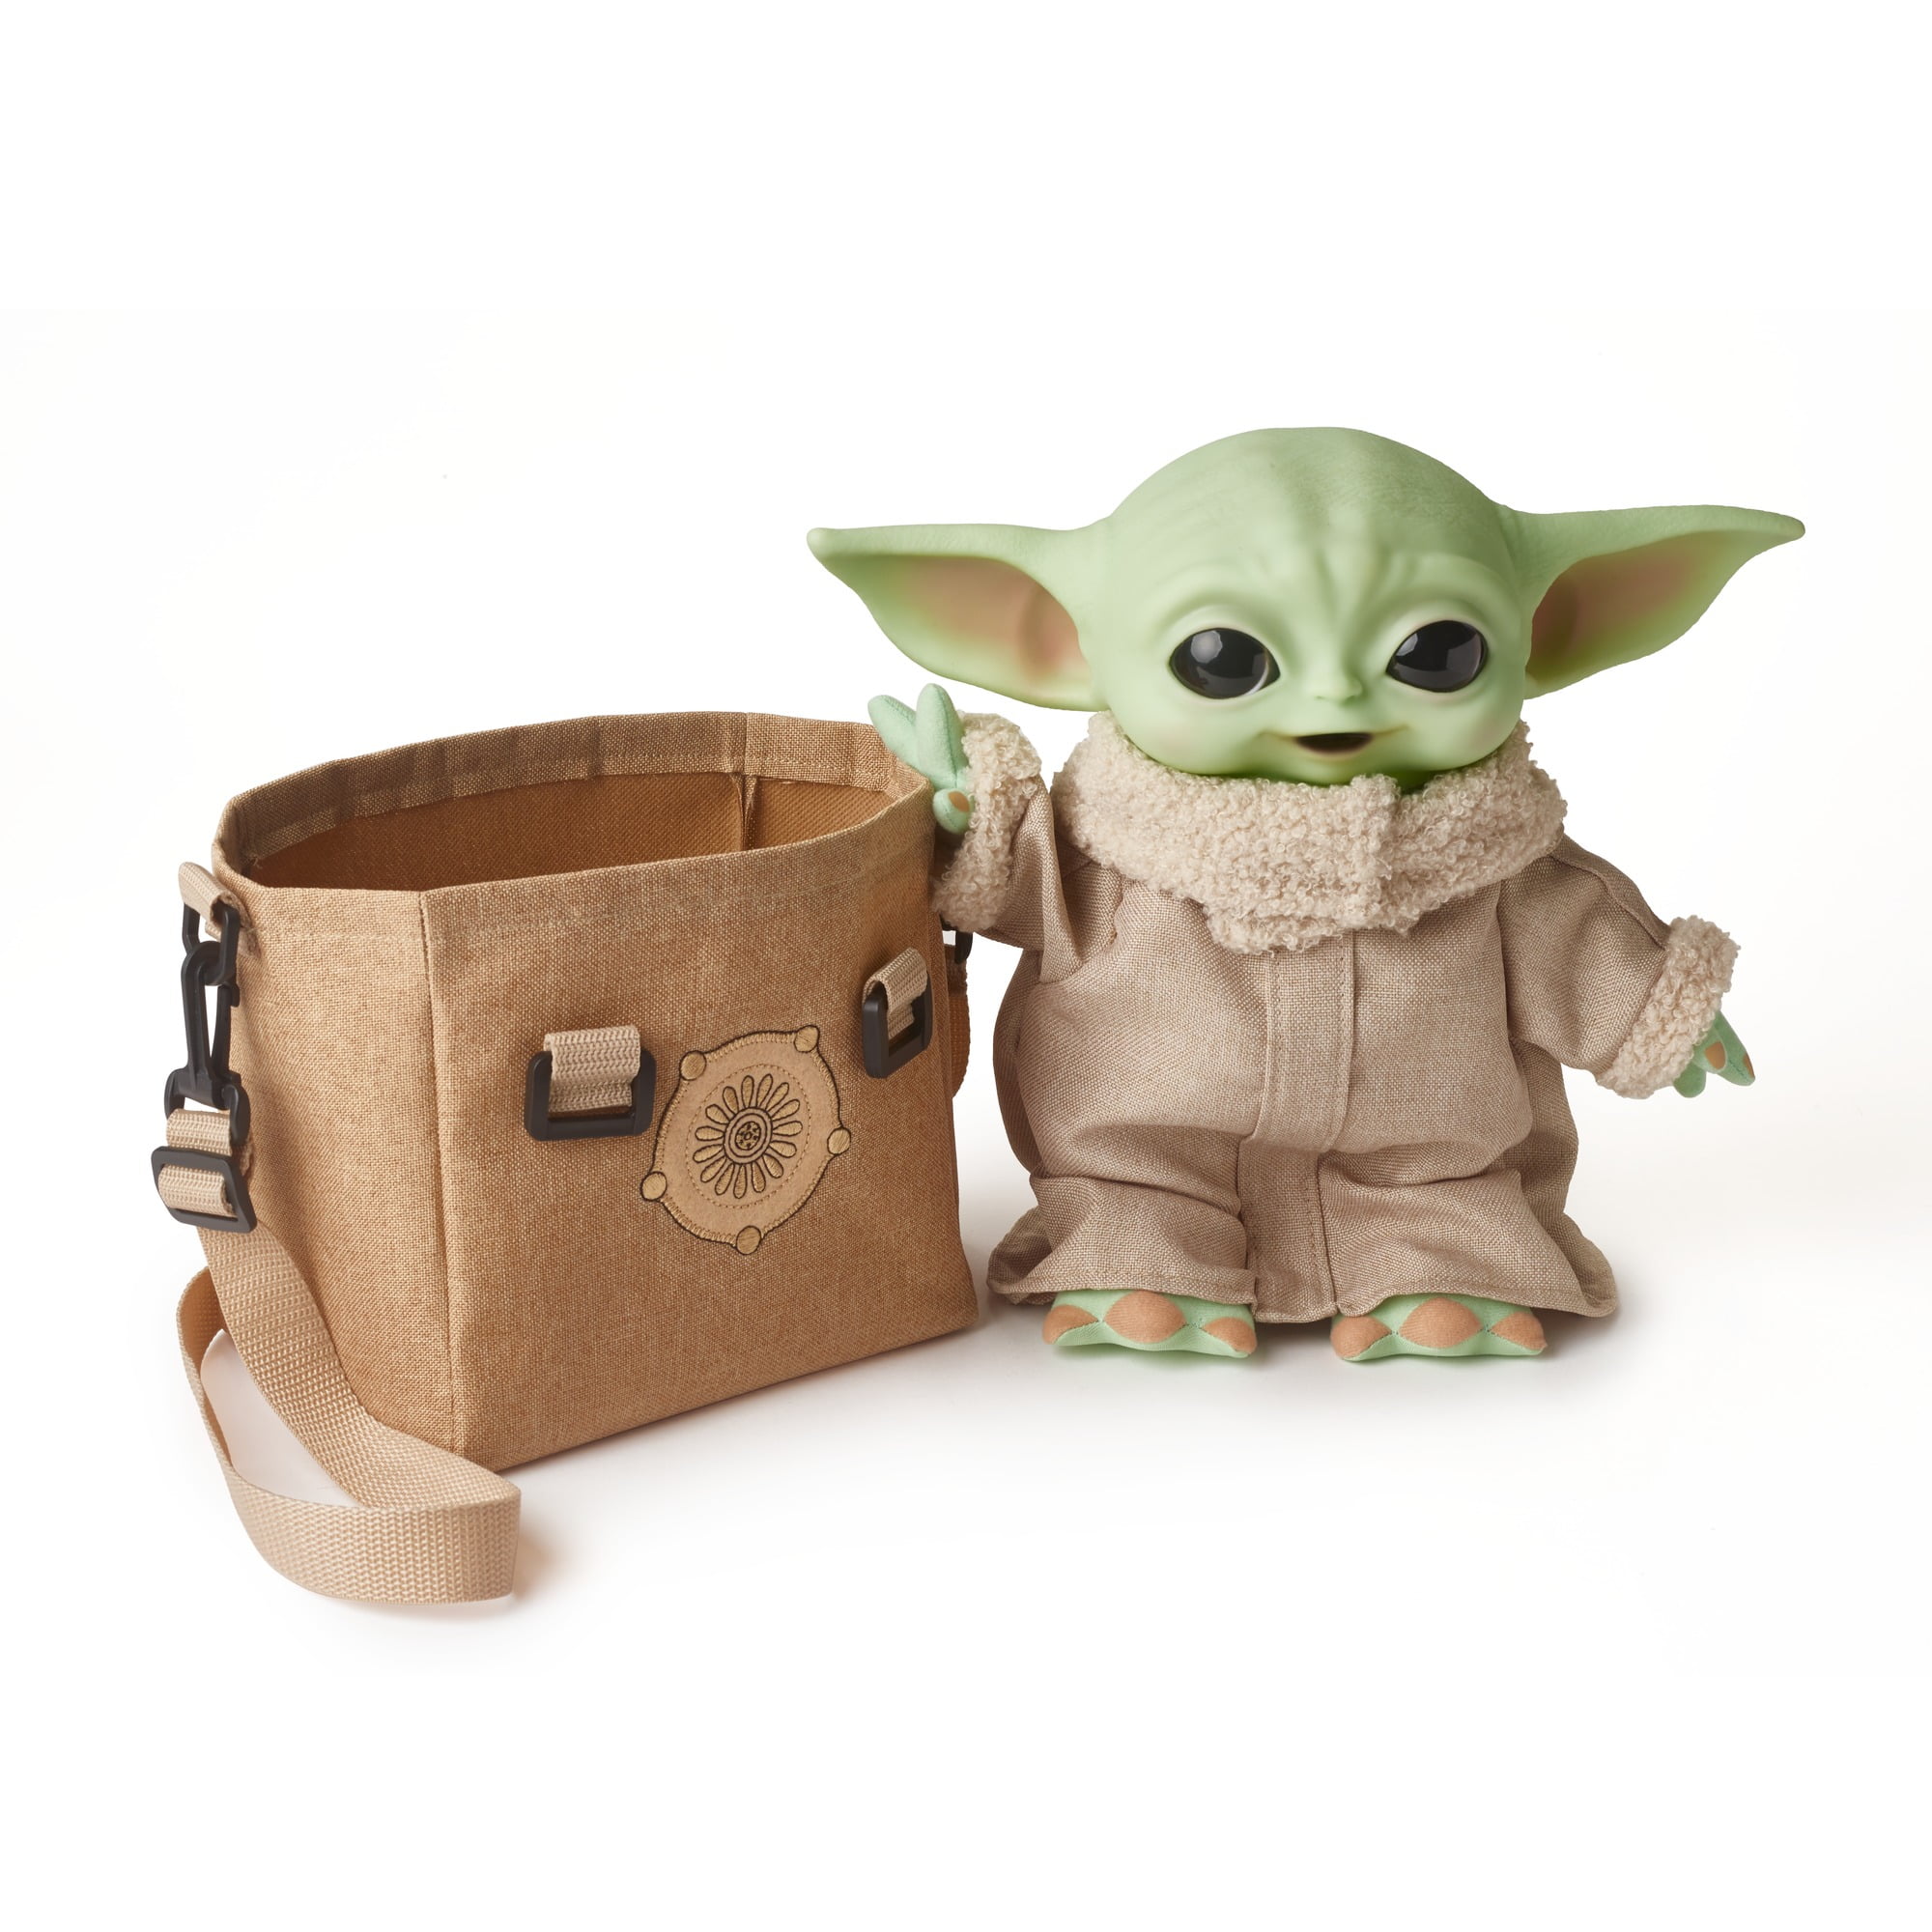 Baby Yoda Star Wars Jedi Master Action Figure Mandalorian Series Lego Mini Toy / 